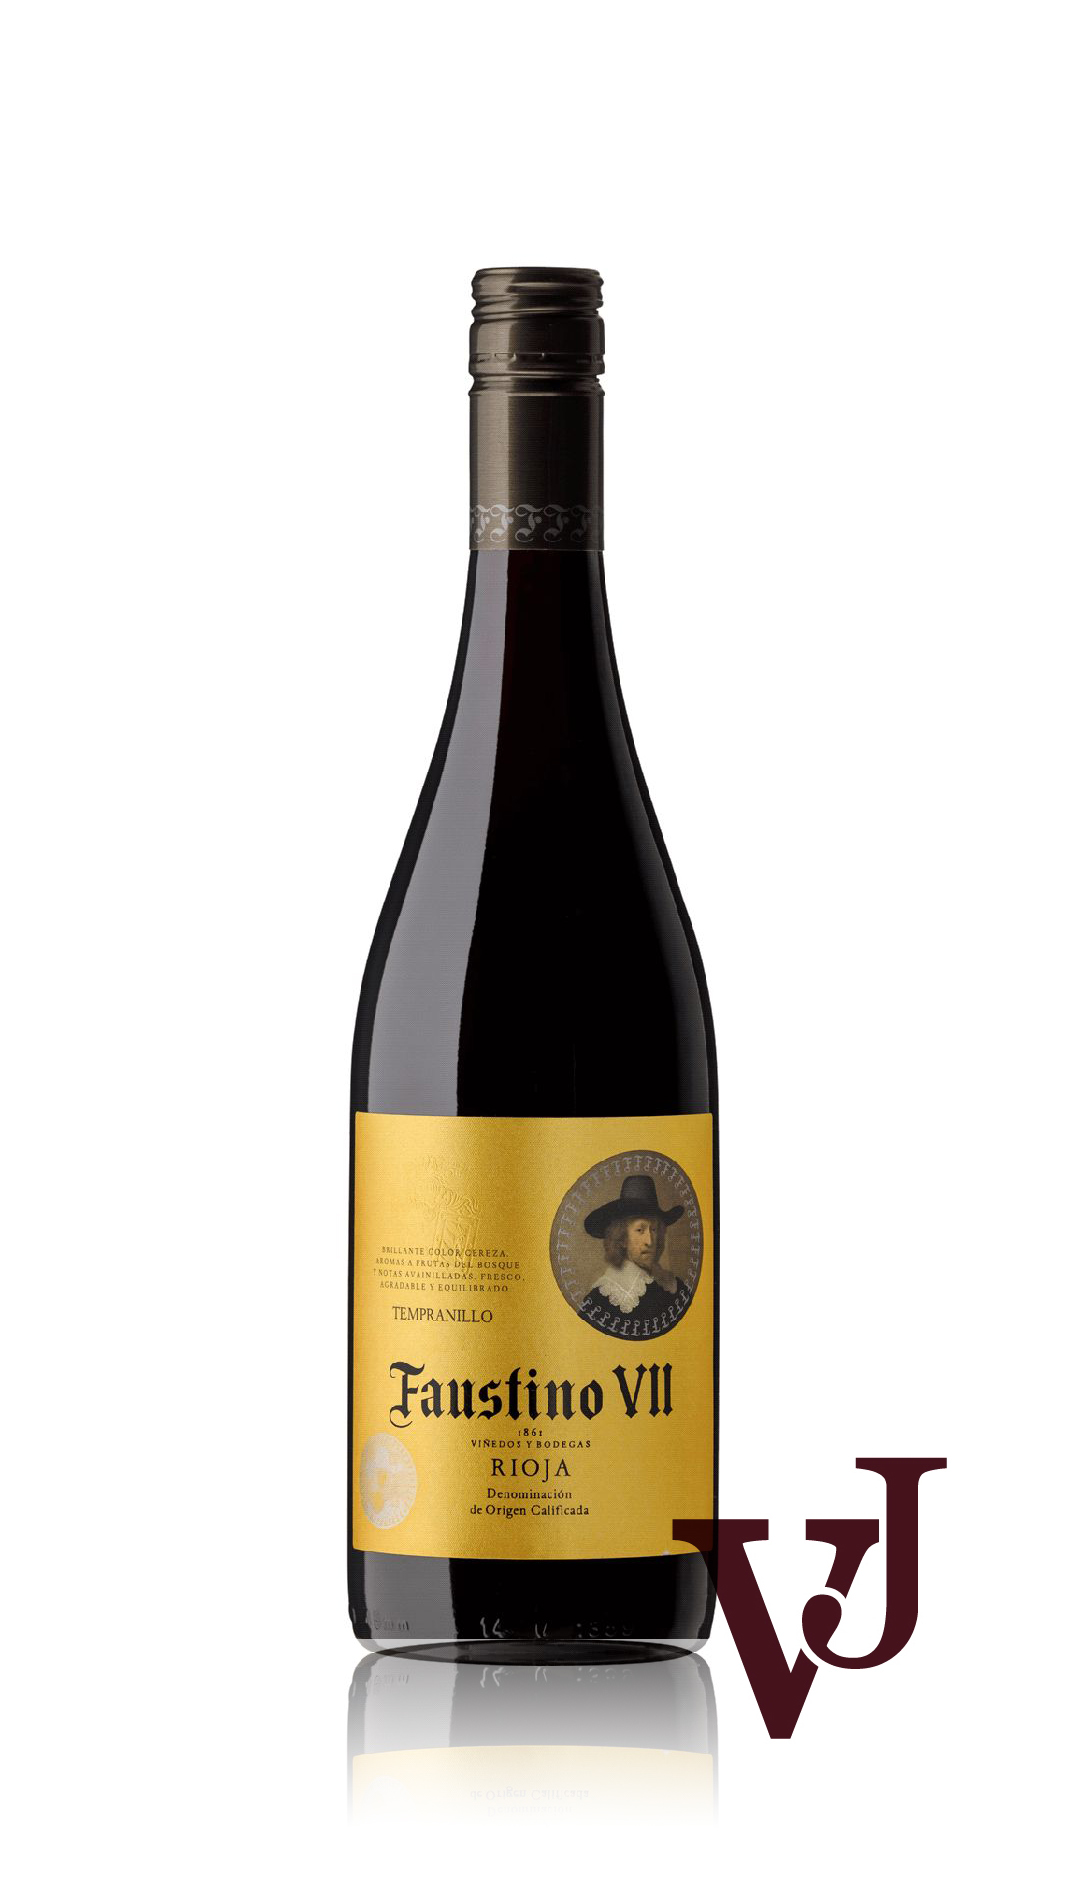 Faustino VII